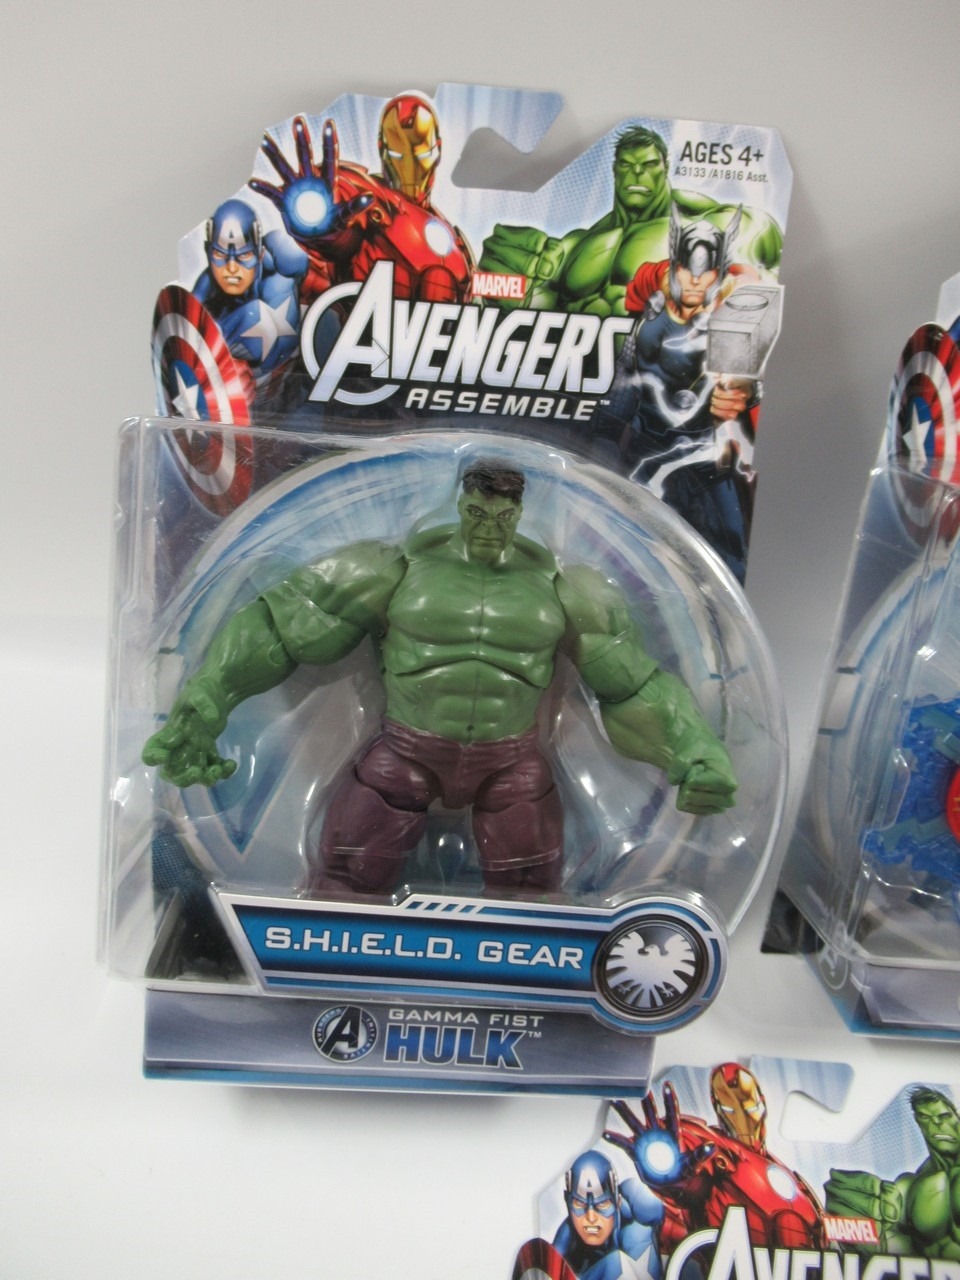 Marvel Avengers Infinity War Toy Haul Captain America Hulk Iron